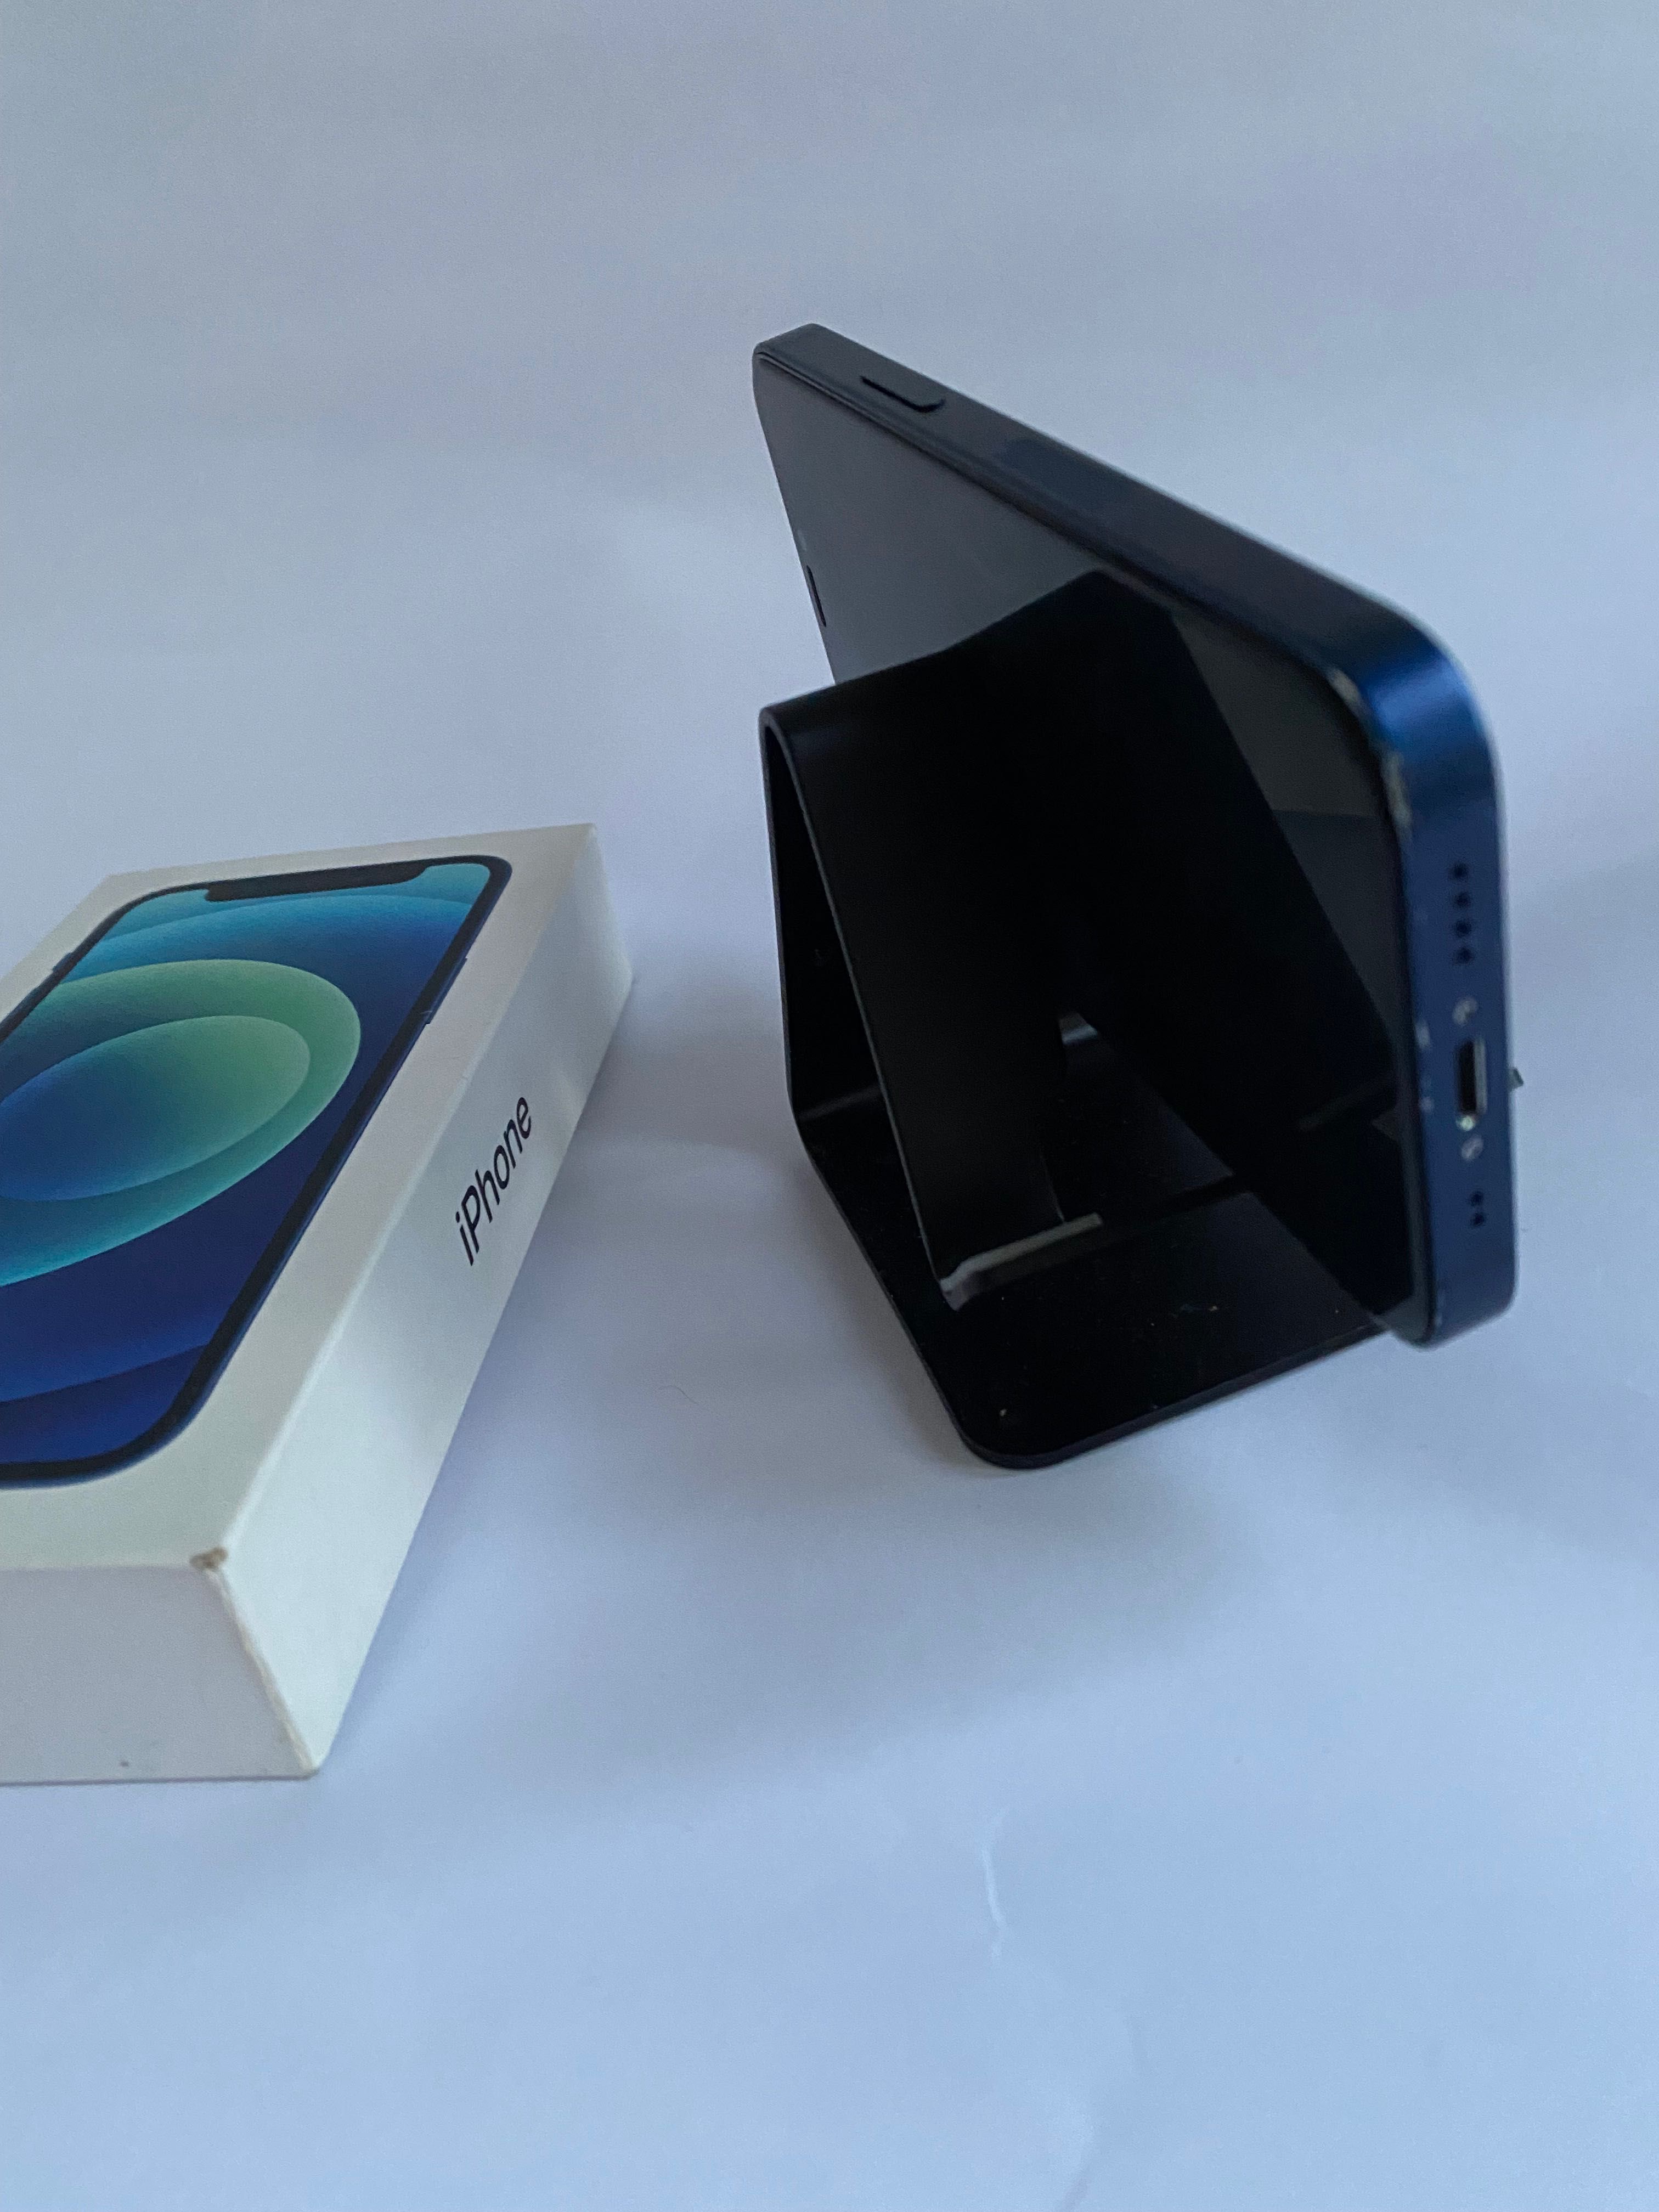 iPhone 12 mini, blue, 64gb neverlock